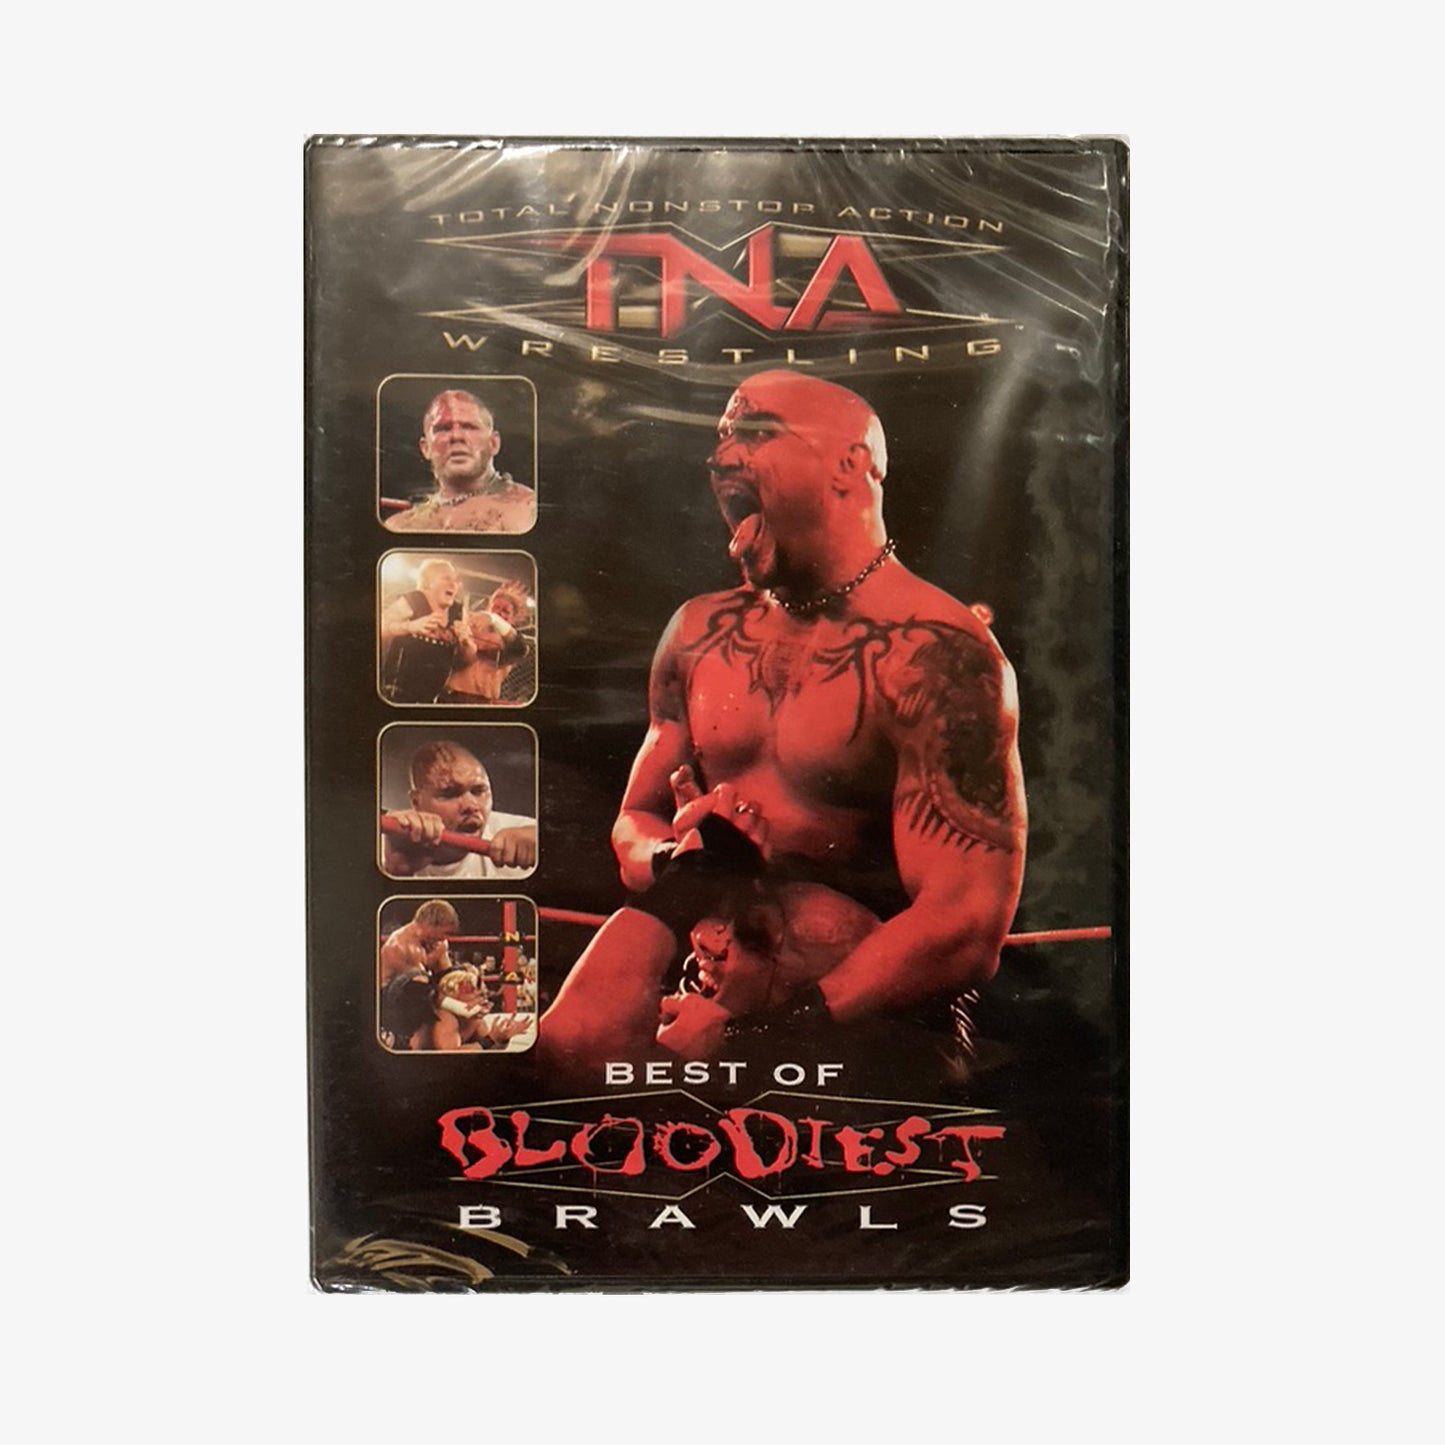 TNA Best of Bloodiest Brawls DVD from Fightabilia.com